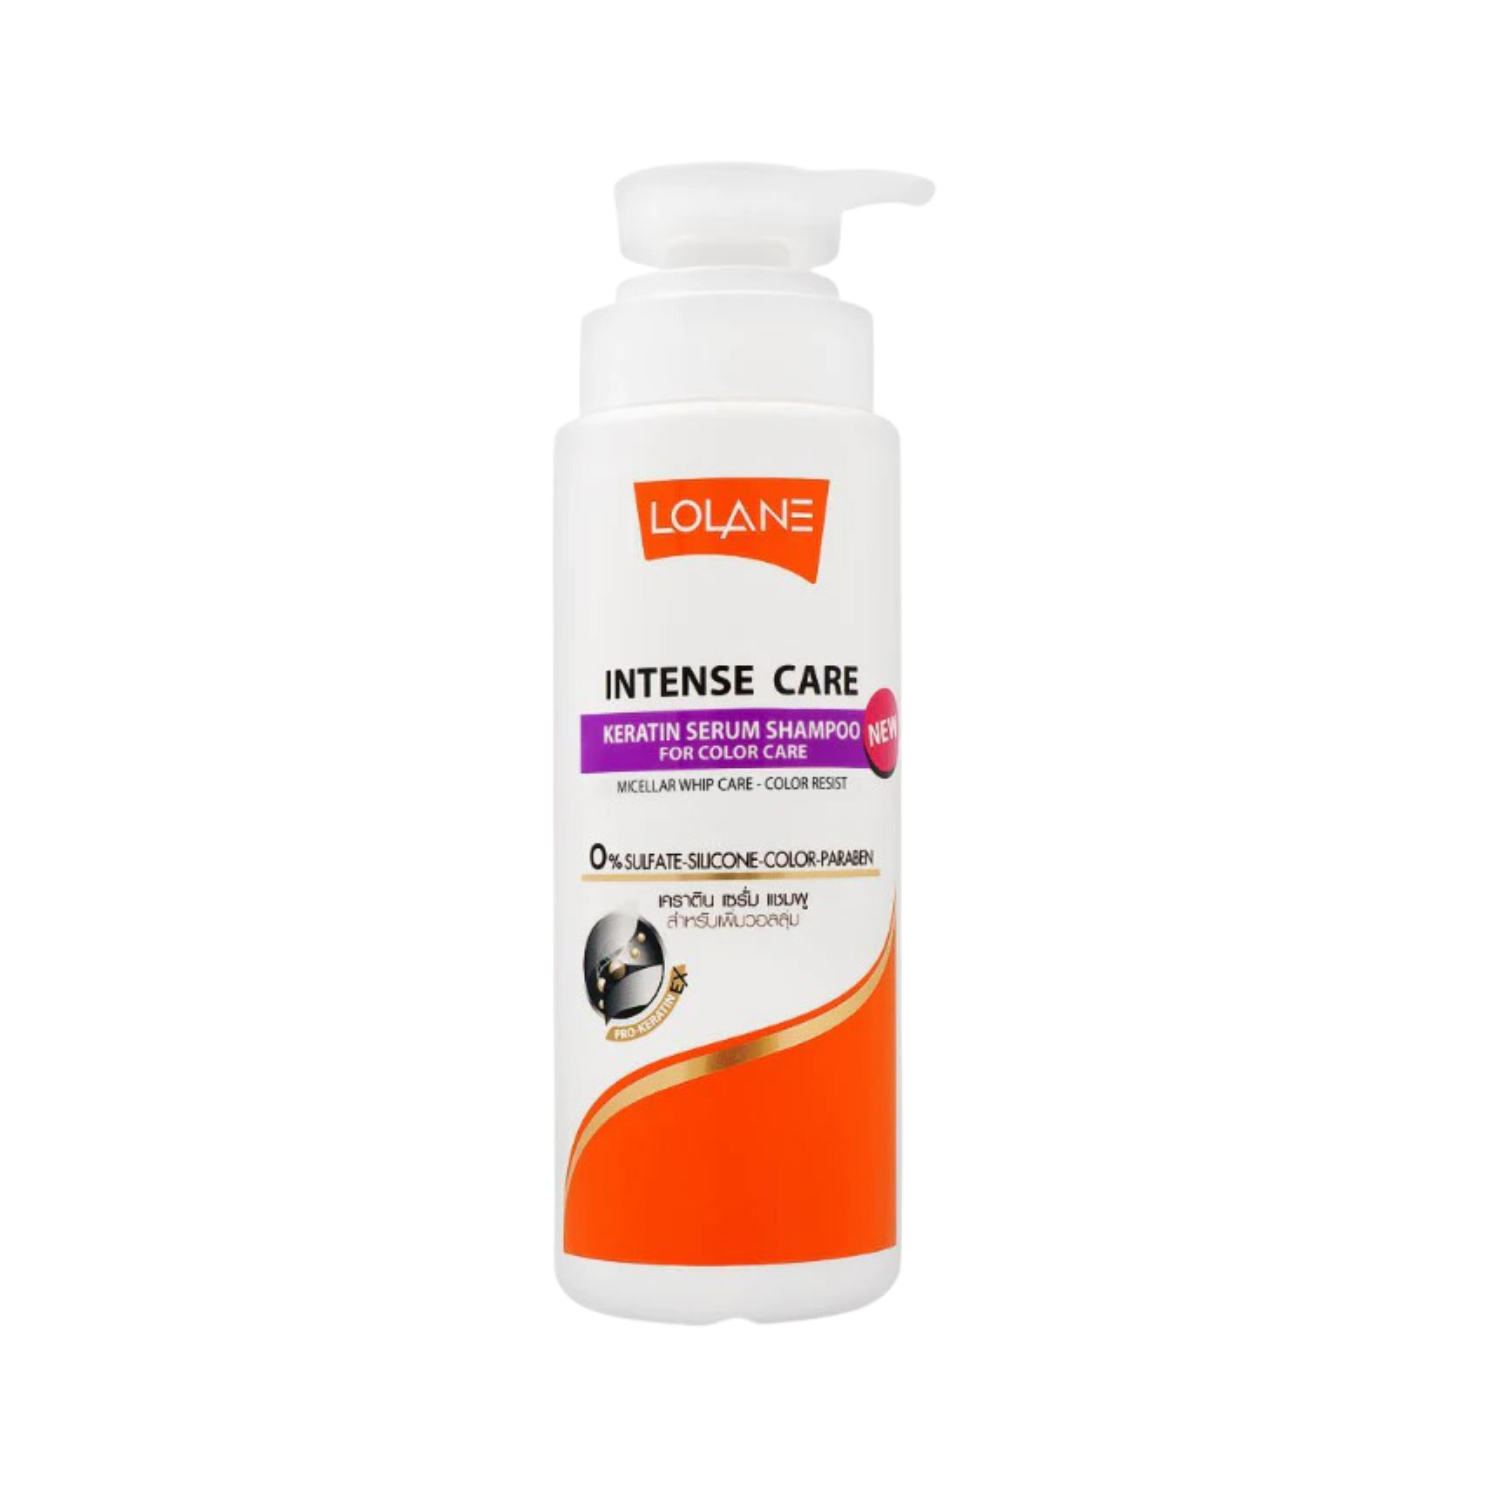 lolane-intense-care-keratin-serum-shampoo-for-color-care-400ml